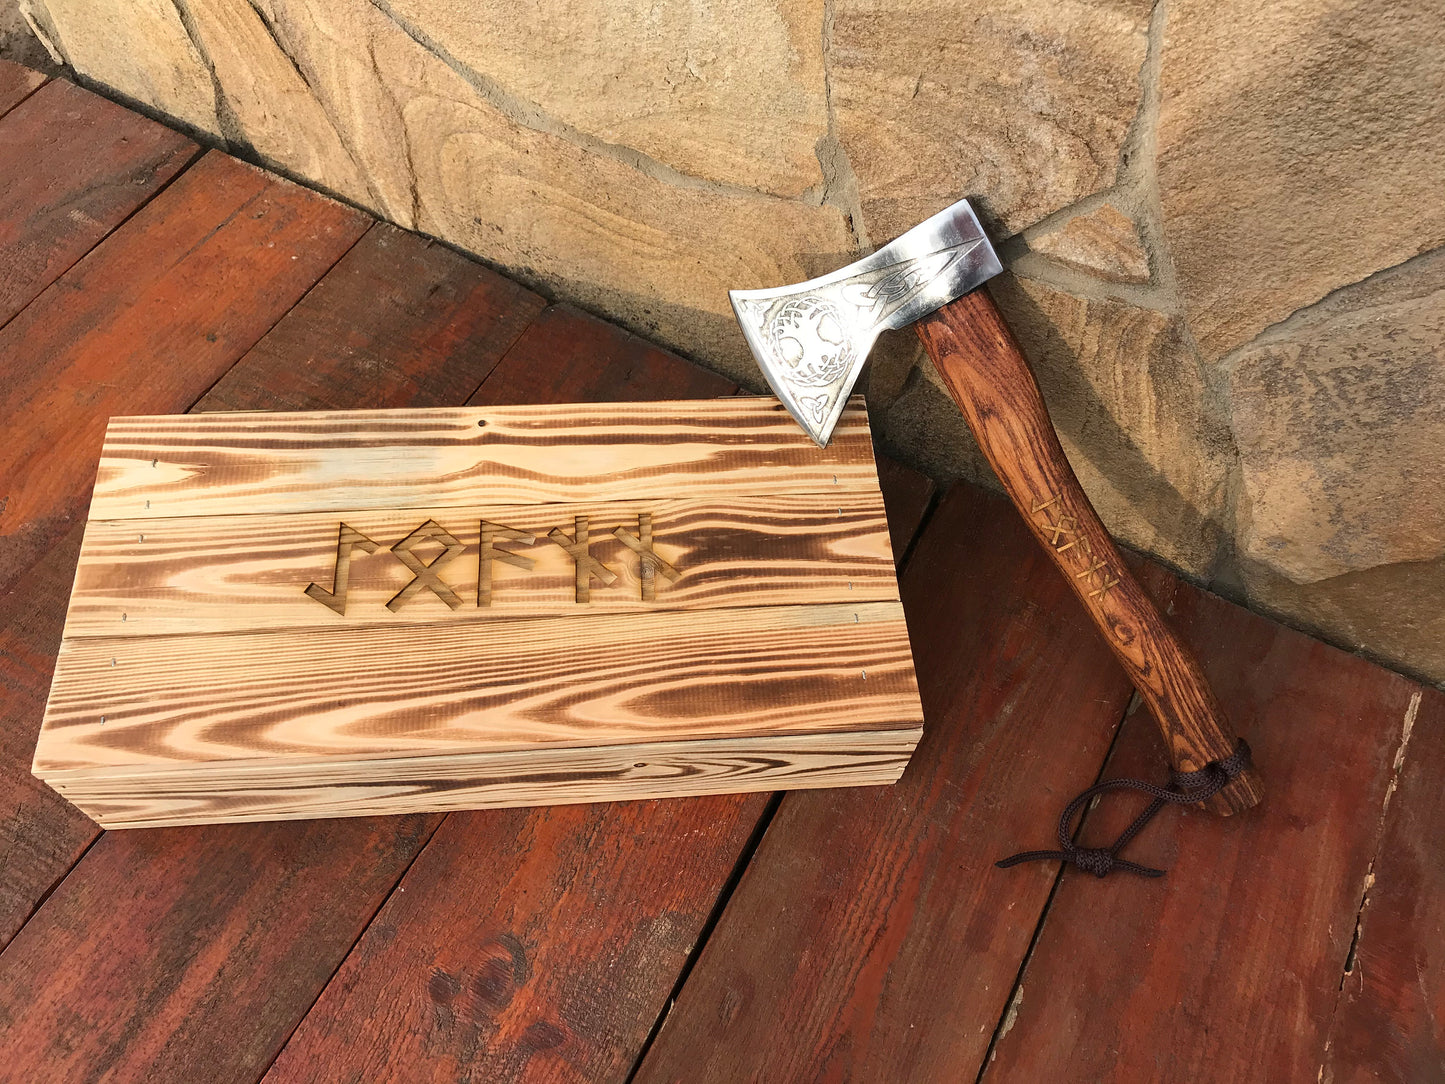 Runic gift, runic axe, mens gift, tree of life, viking axe, gift box, Celtic, hatchet, viking, wooden gift, handyman tool, groomsmen gift